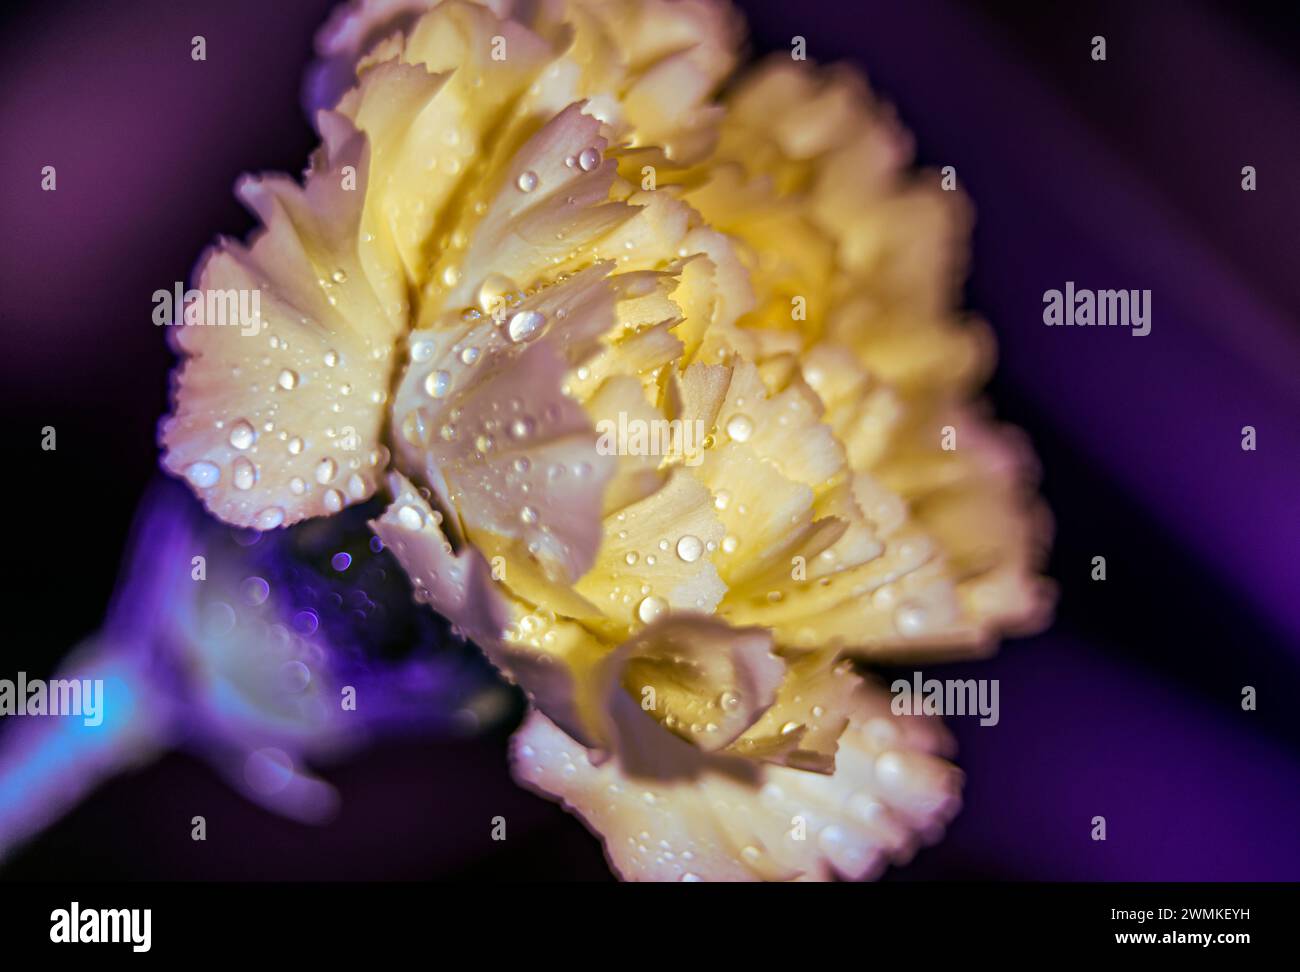 Detalle de primer plano de un clavel amarillo pálido (Dianthus caryophyllus) cubierto de gotas de agua e iluminado por la luz, con un fondo iluminado púrpura Foto de stock